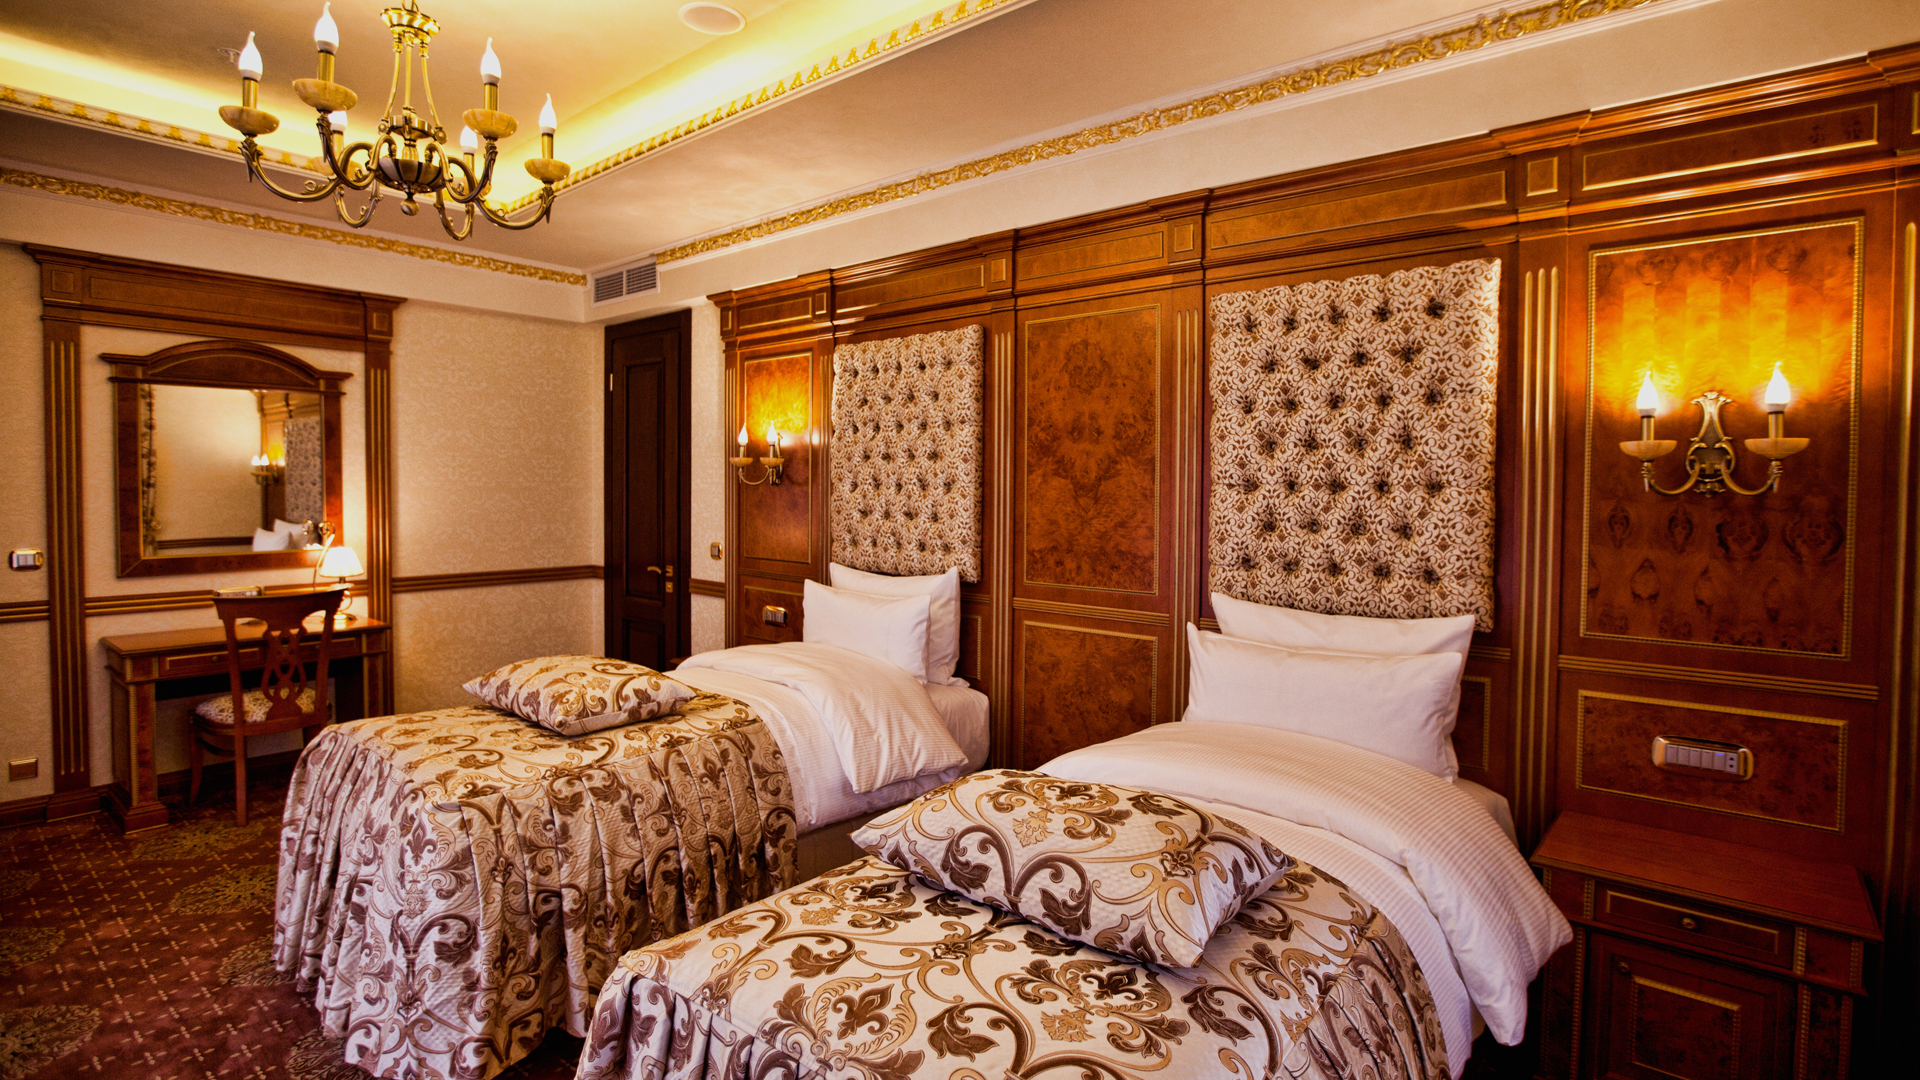 Hotel detail. Отель фараон Армения. Гранд отель Ереван. Гранд отель Ереван в Ереване. Гранд отель Ереван 5.